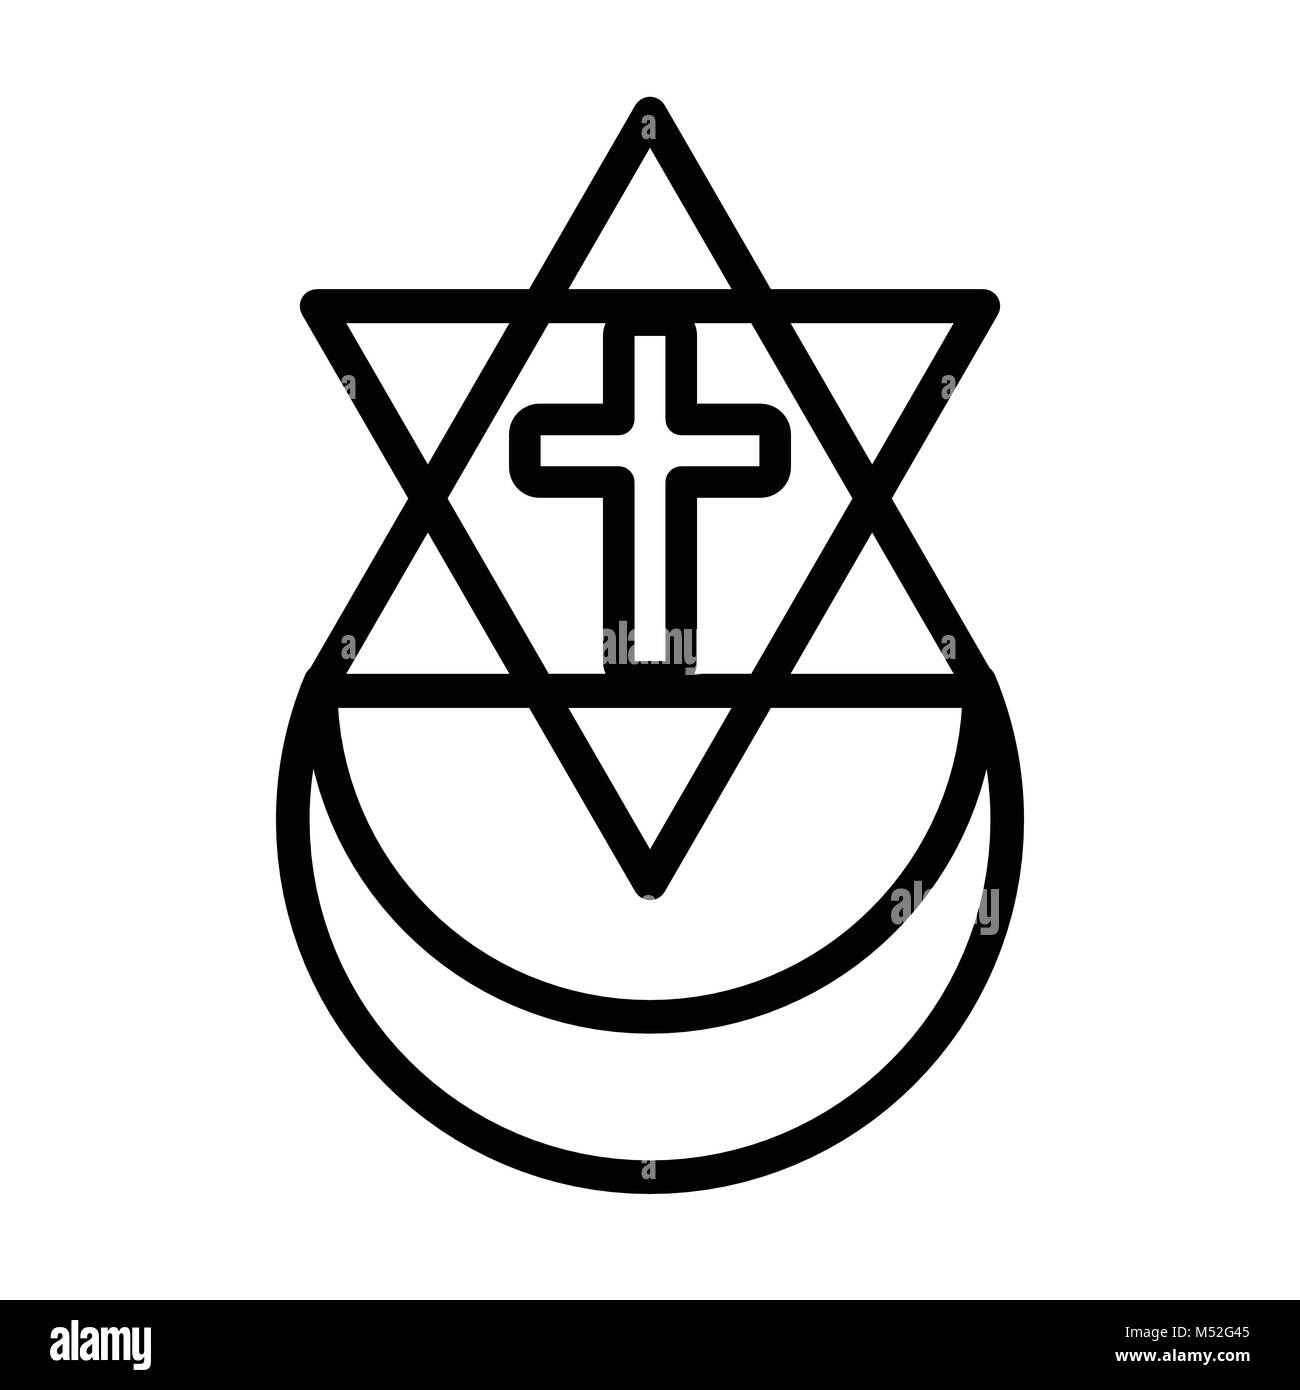 Harmony of religions - Star of Kind David, Christian Cross and Islamic Crescent Stock Vector